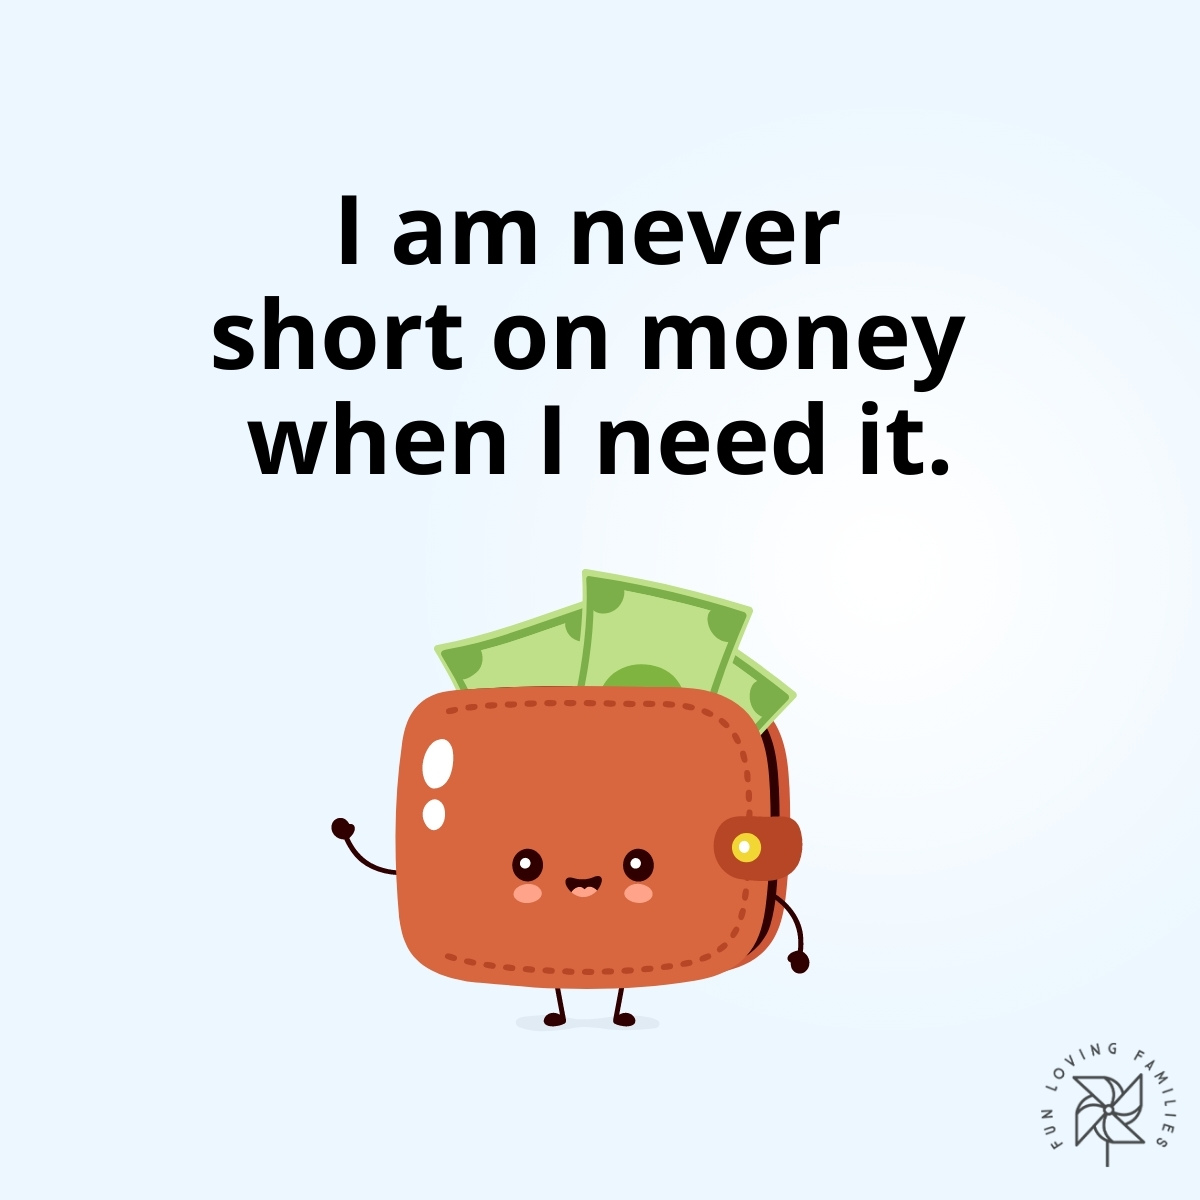 I am never short on money when I need it affirmation